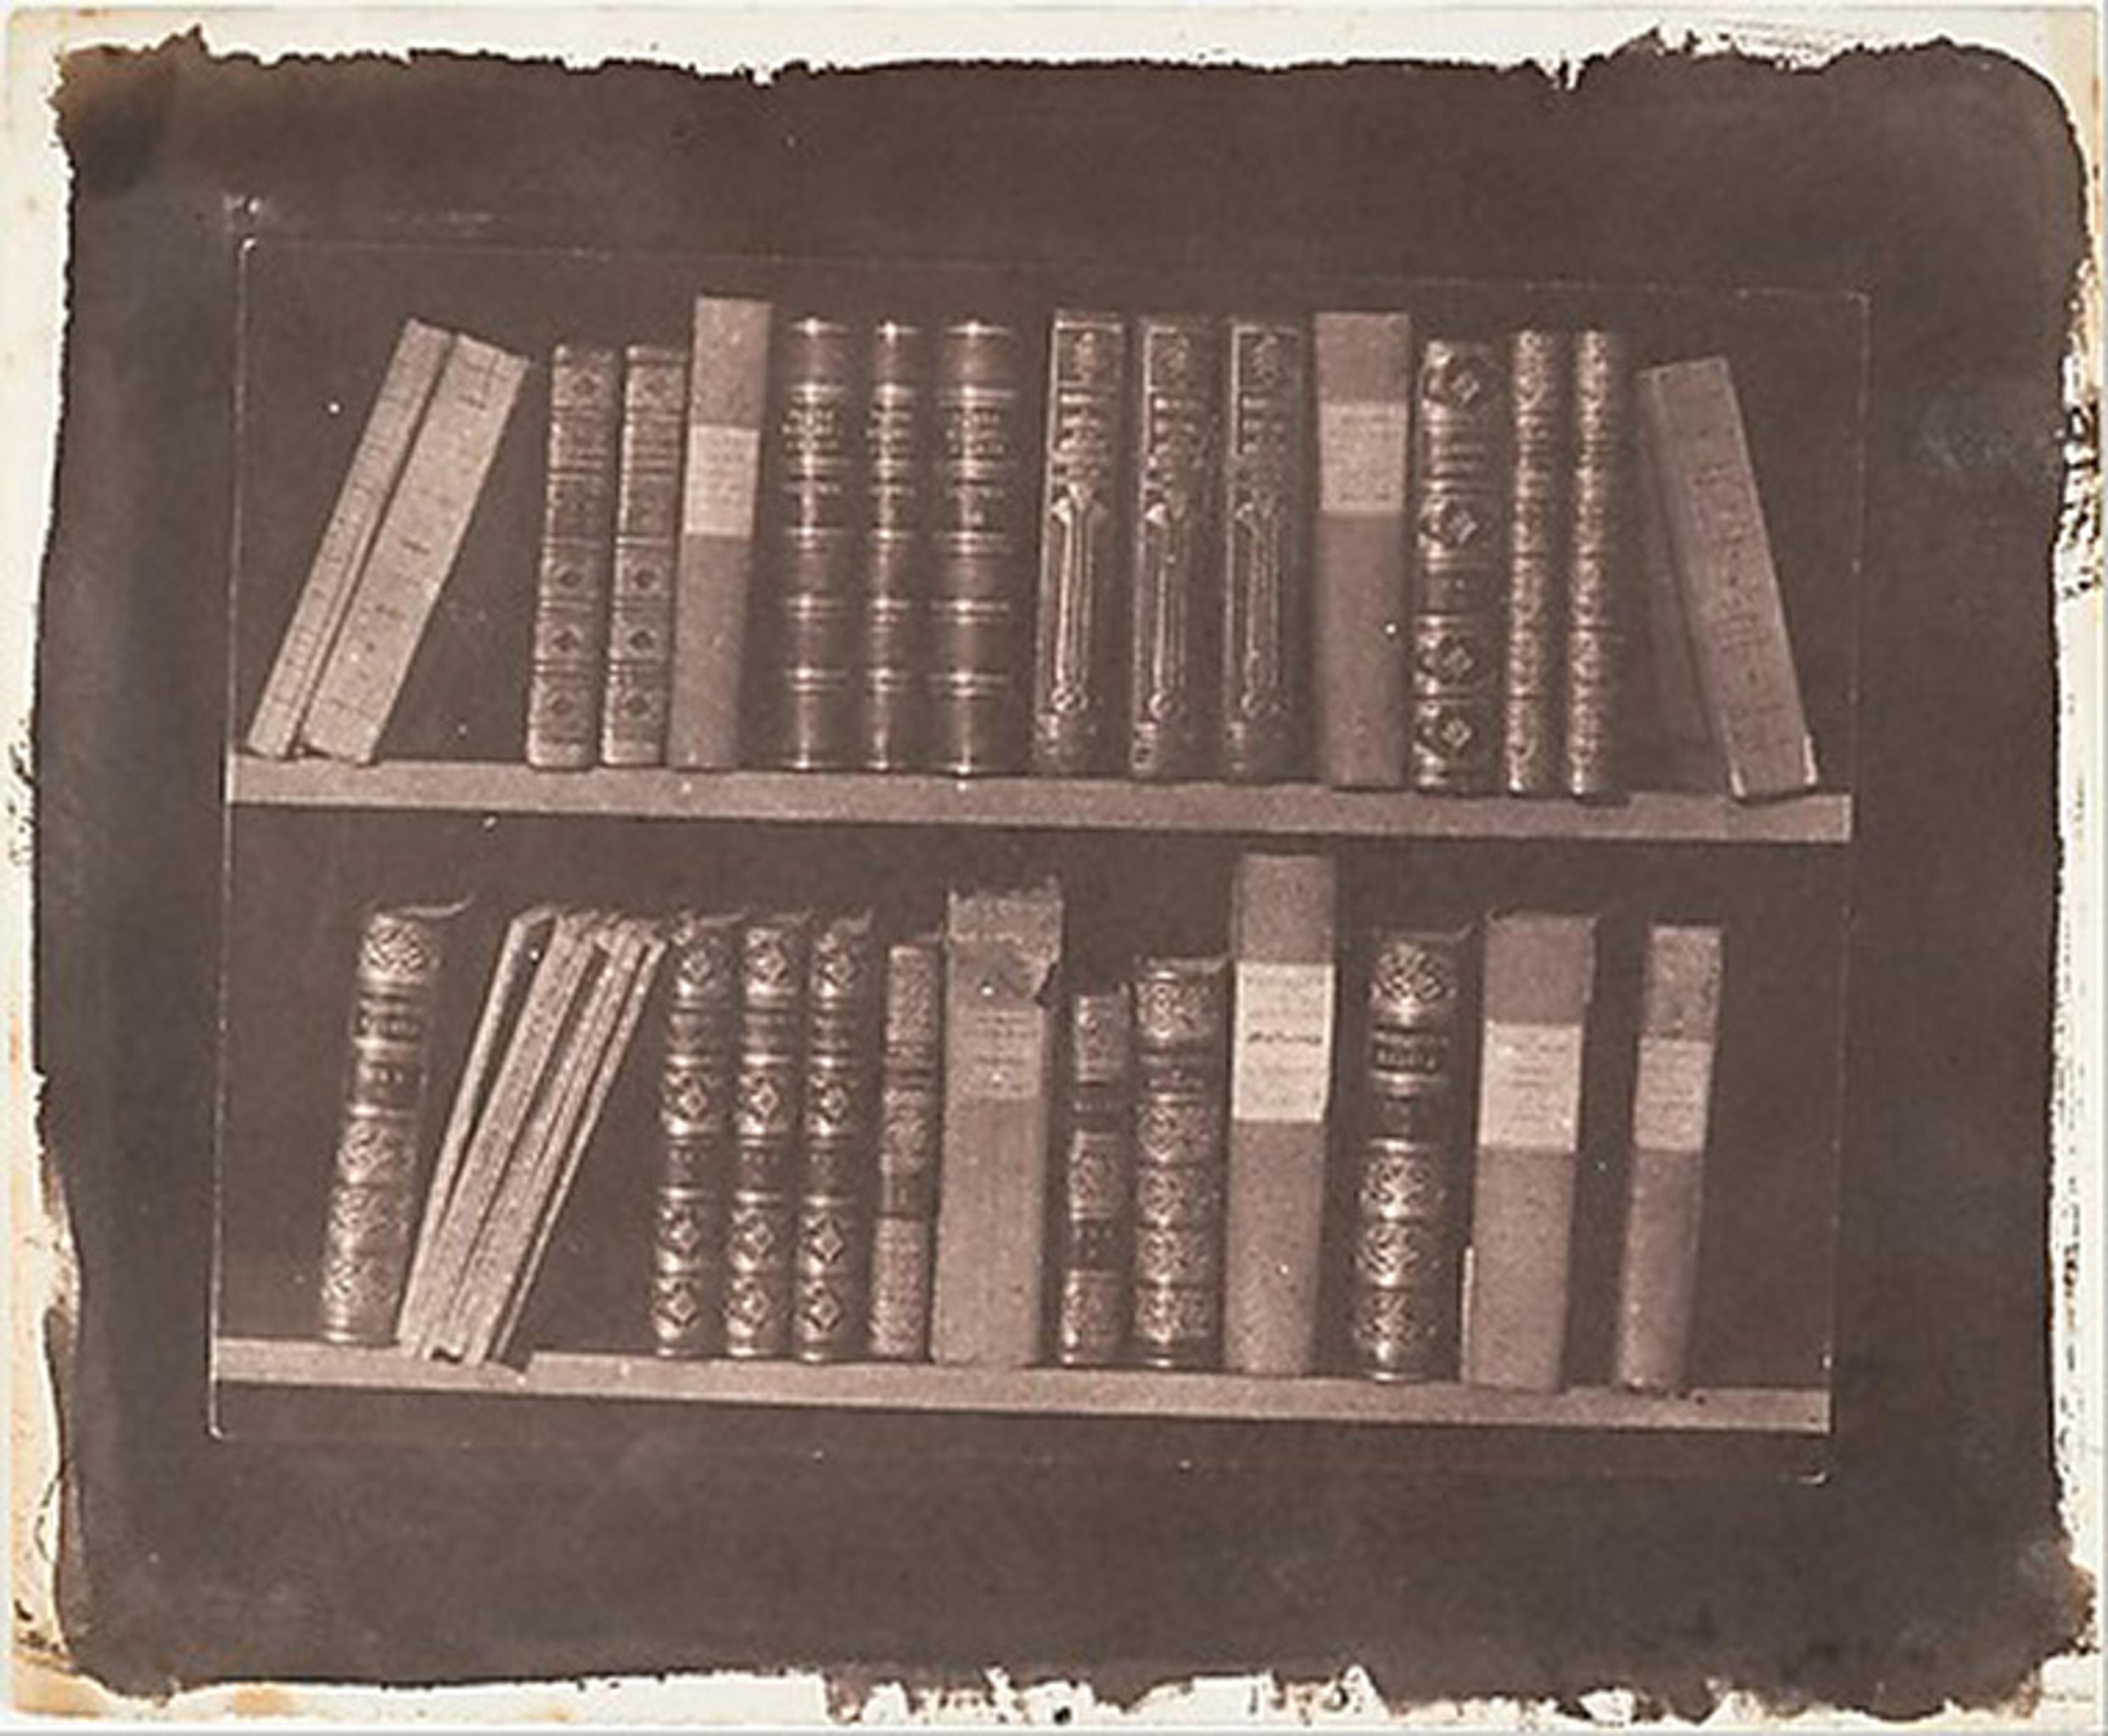 Black and white photo of books